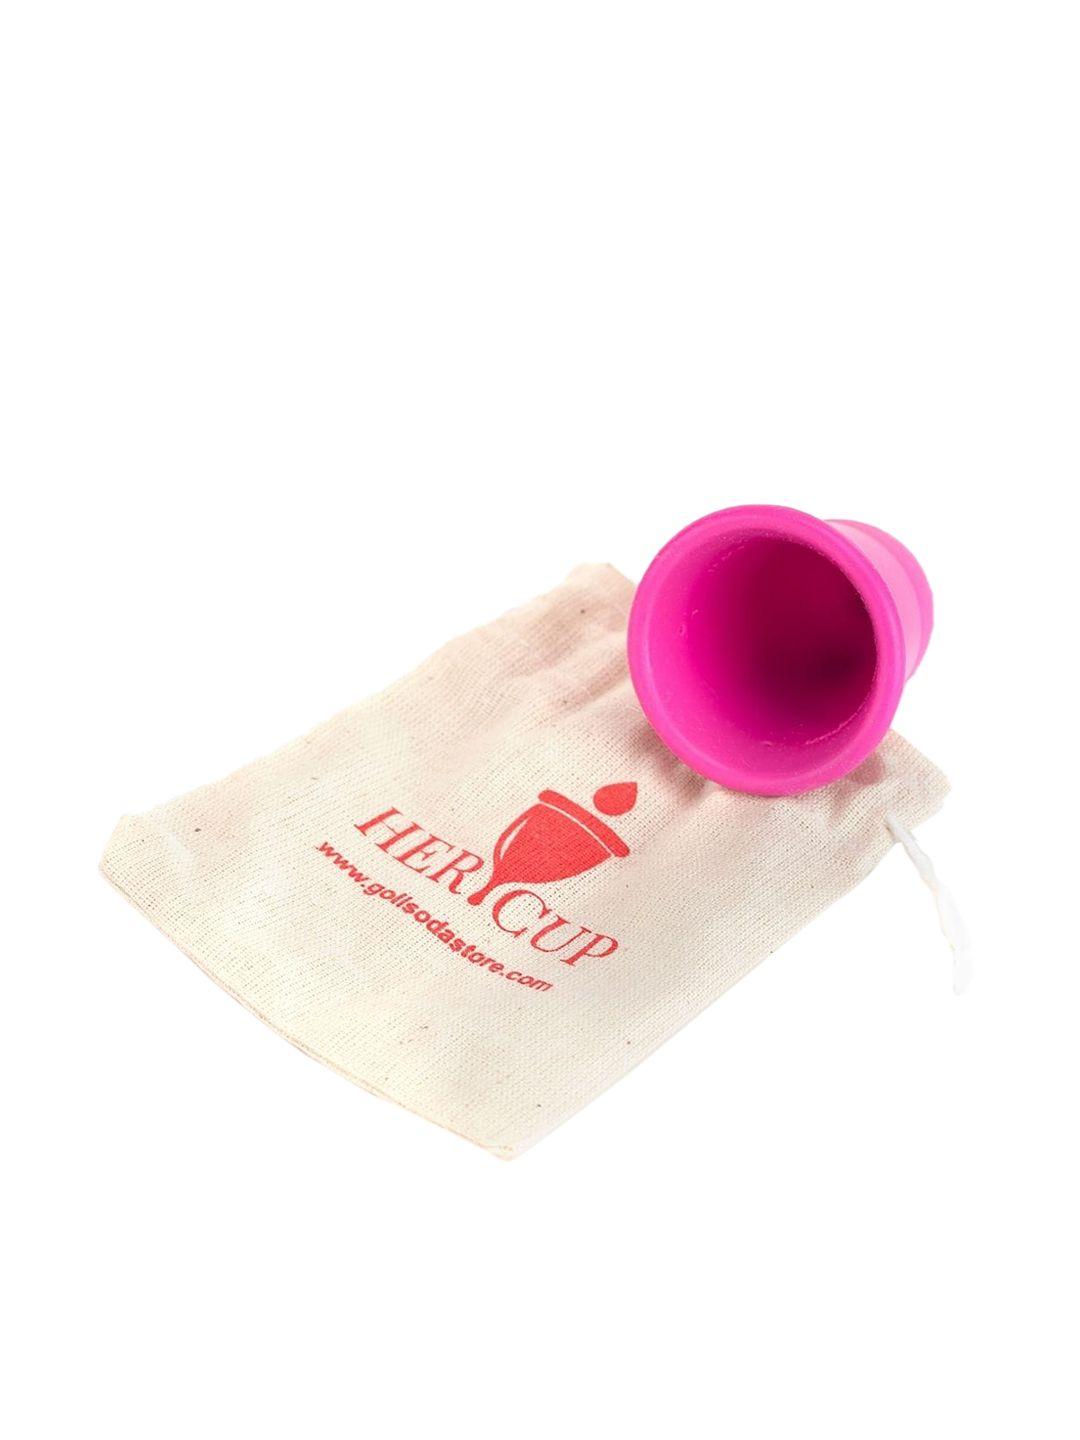 goli soda pink solid silicone menstrual cup - regular